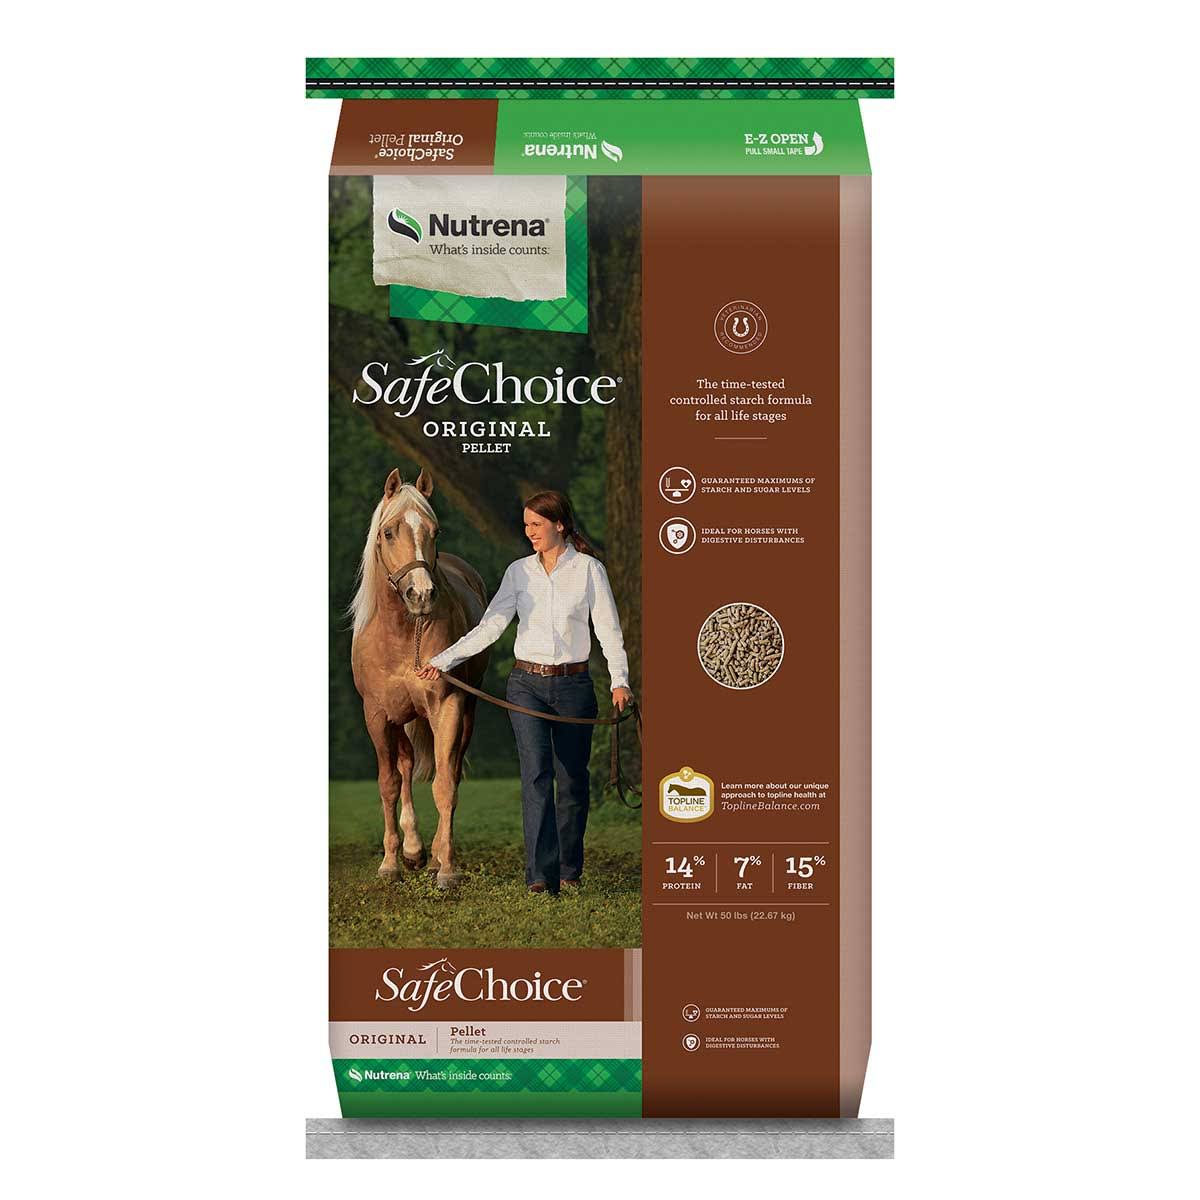 Nutrena Safe Choice Horse Feed